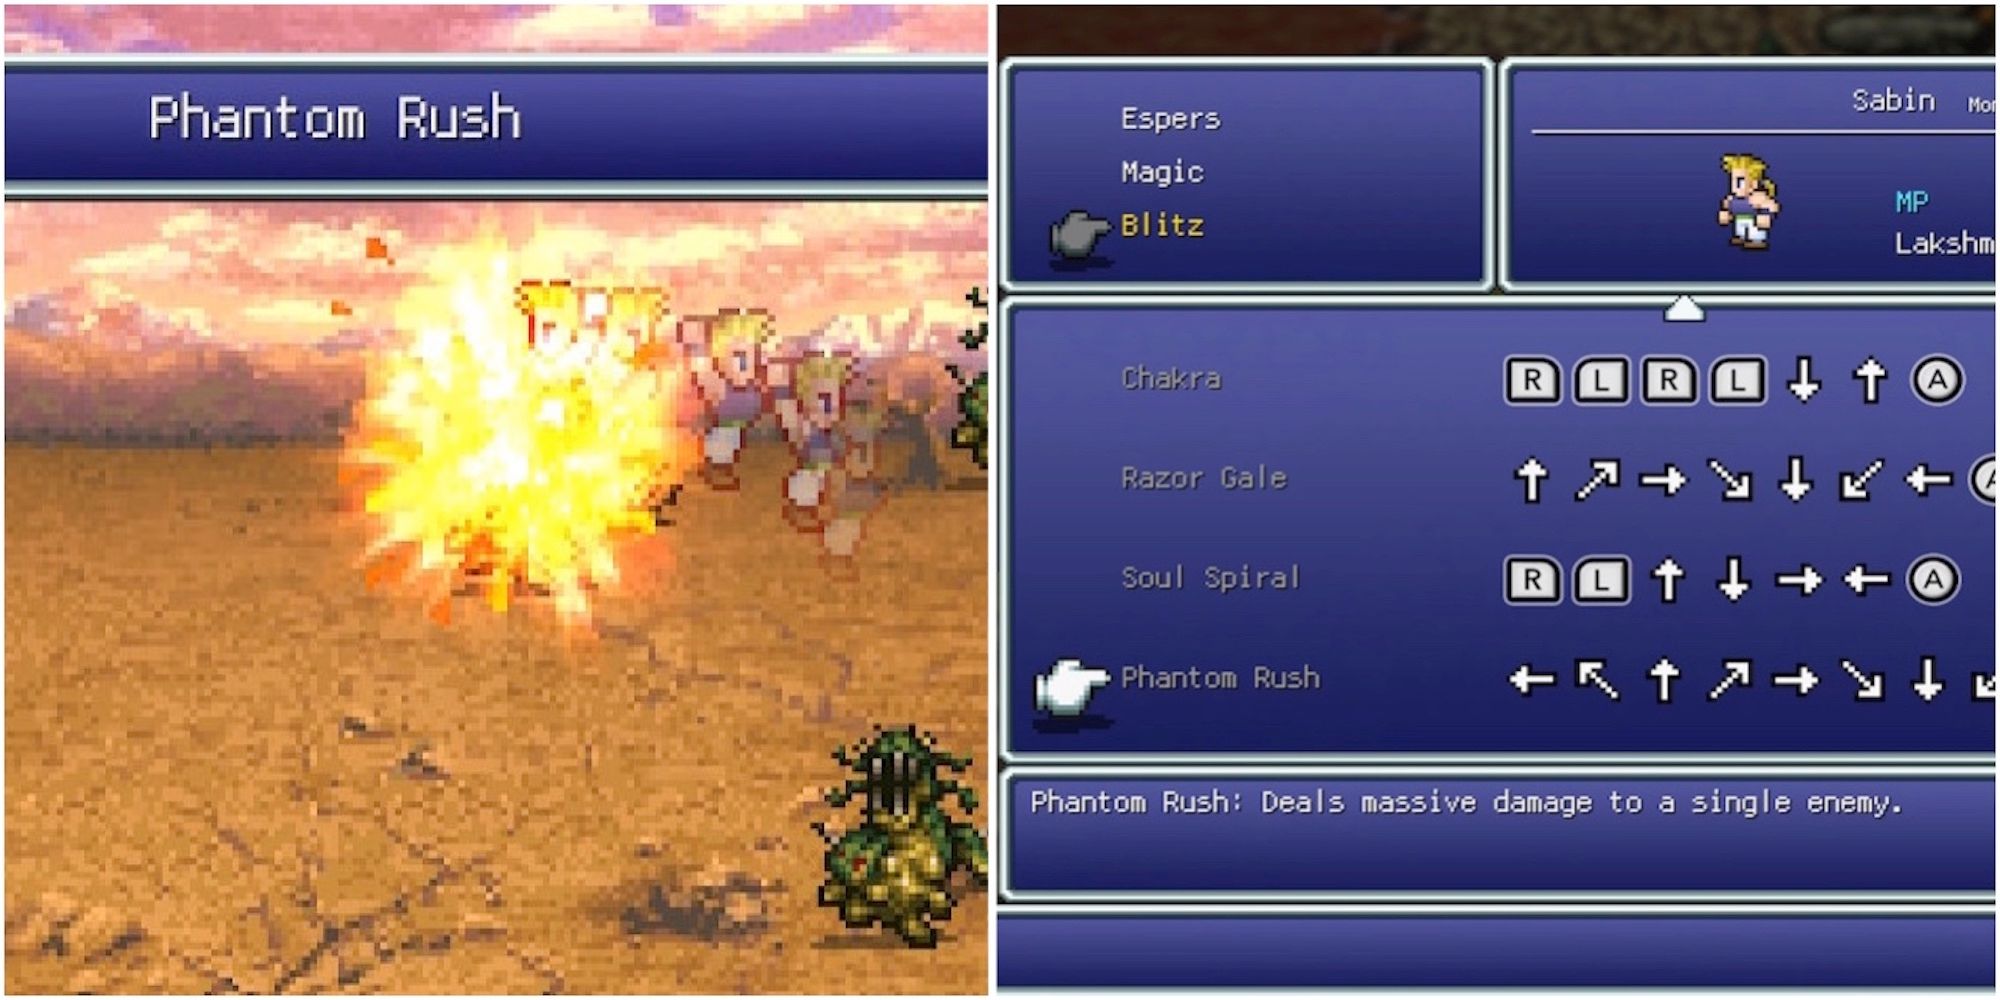 Sabin attacking with Phantom Rush and Phantom Rush in the menu in Final Fantasy 6